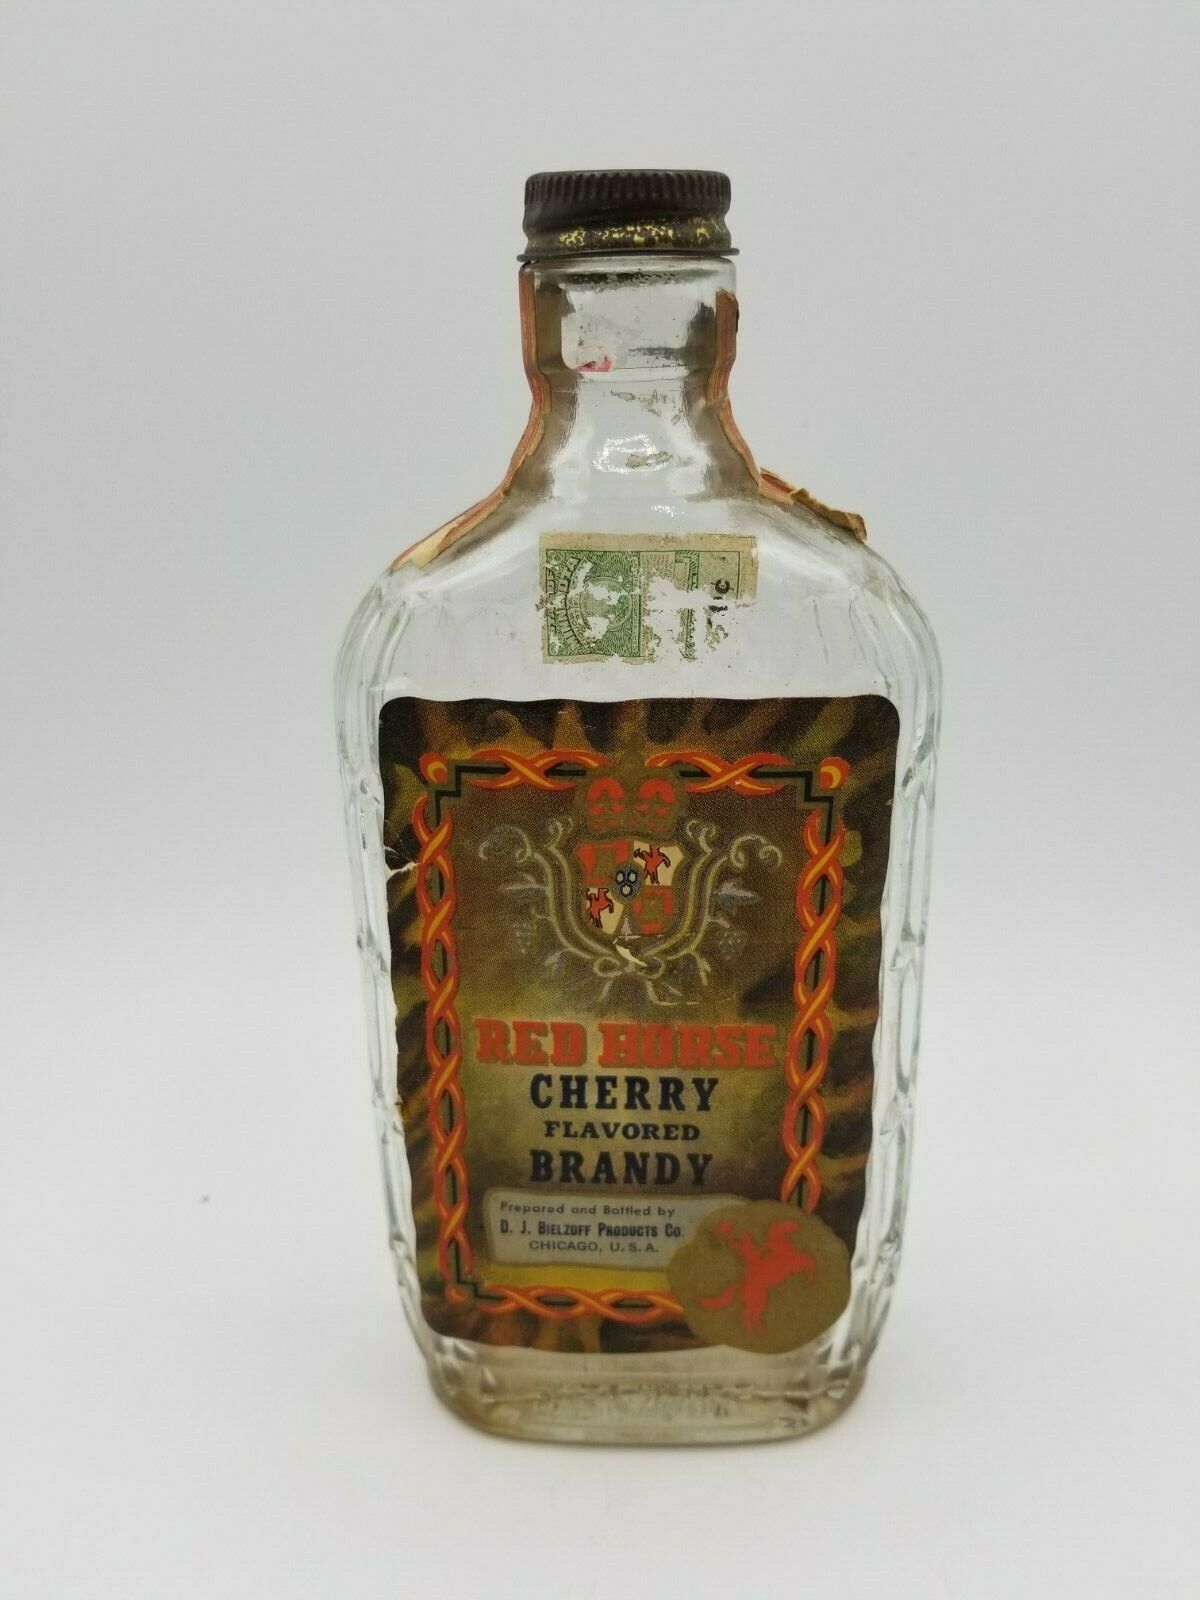 Vintage Liquor Bottle - 1945 Bielzoff Red Horse Cherry Flavored Brandy Bottle